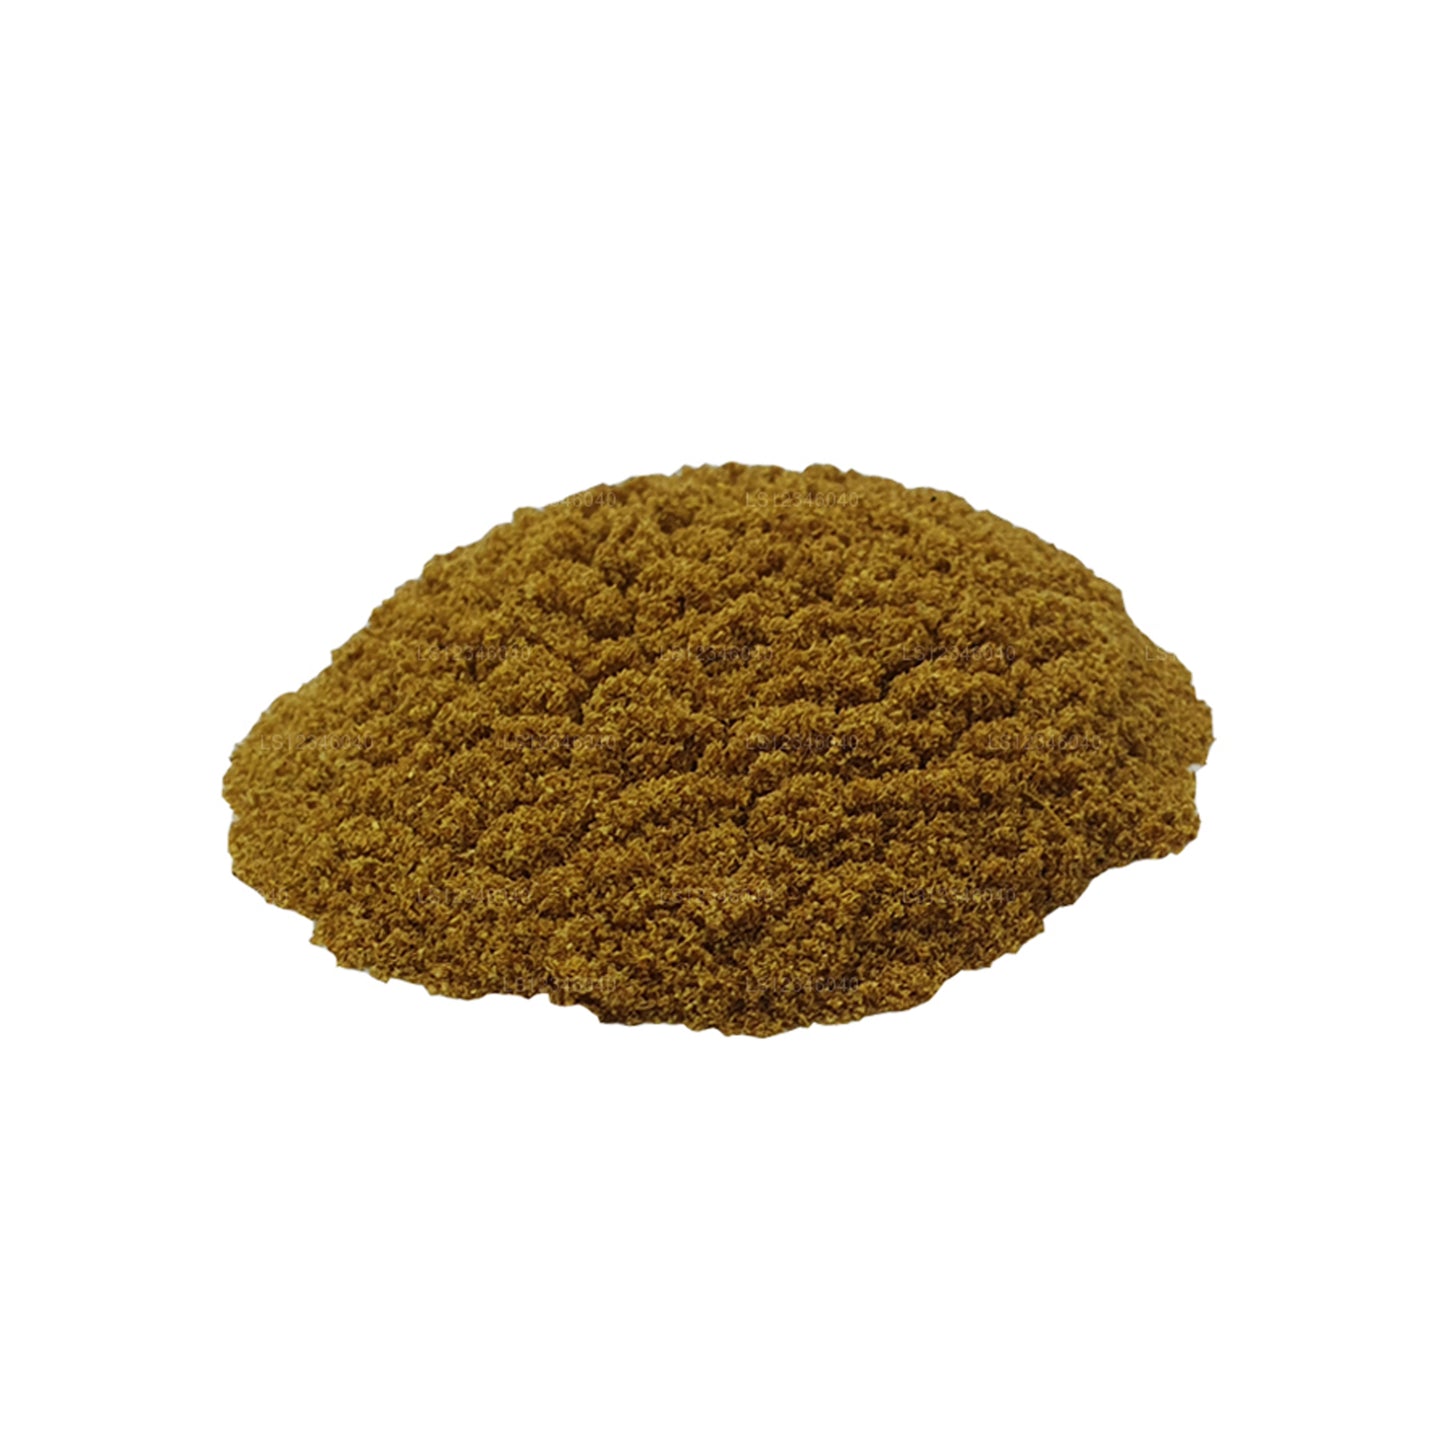 Lakpura (Thuna Paha) Unroasted Curry Powder (100g)